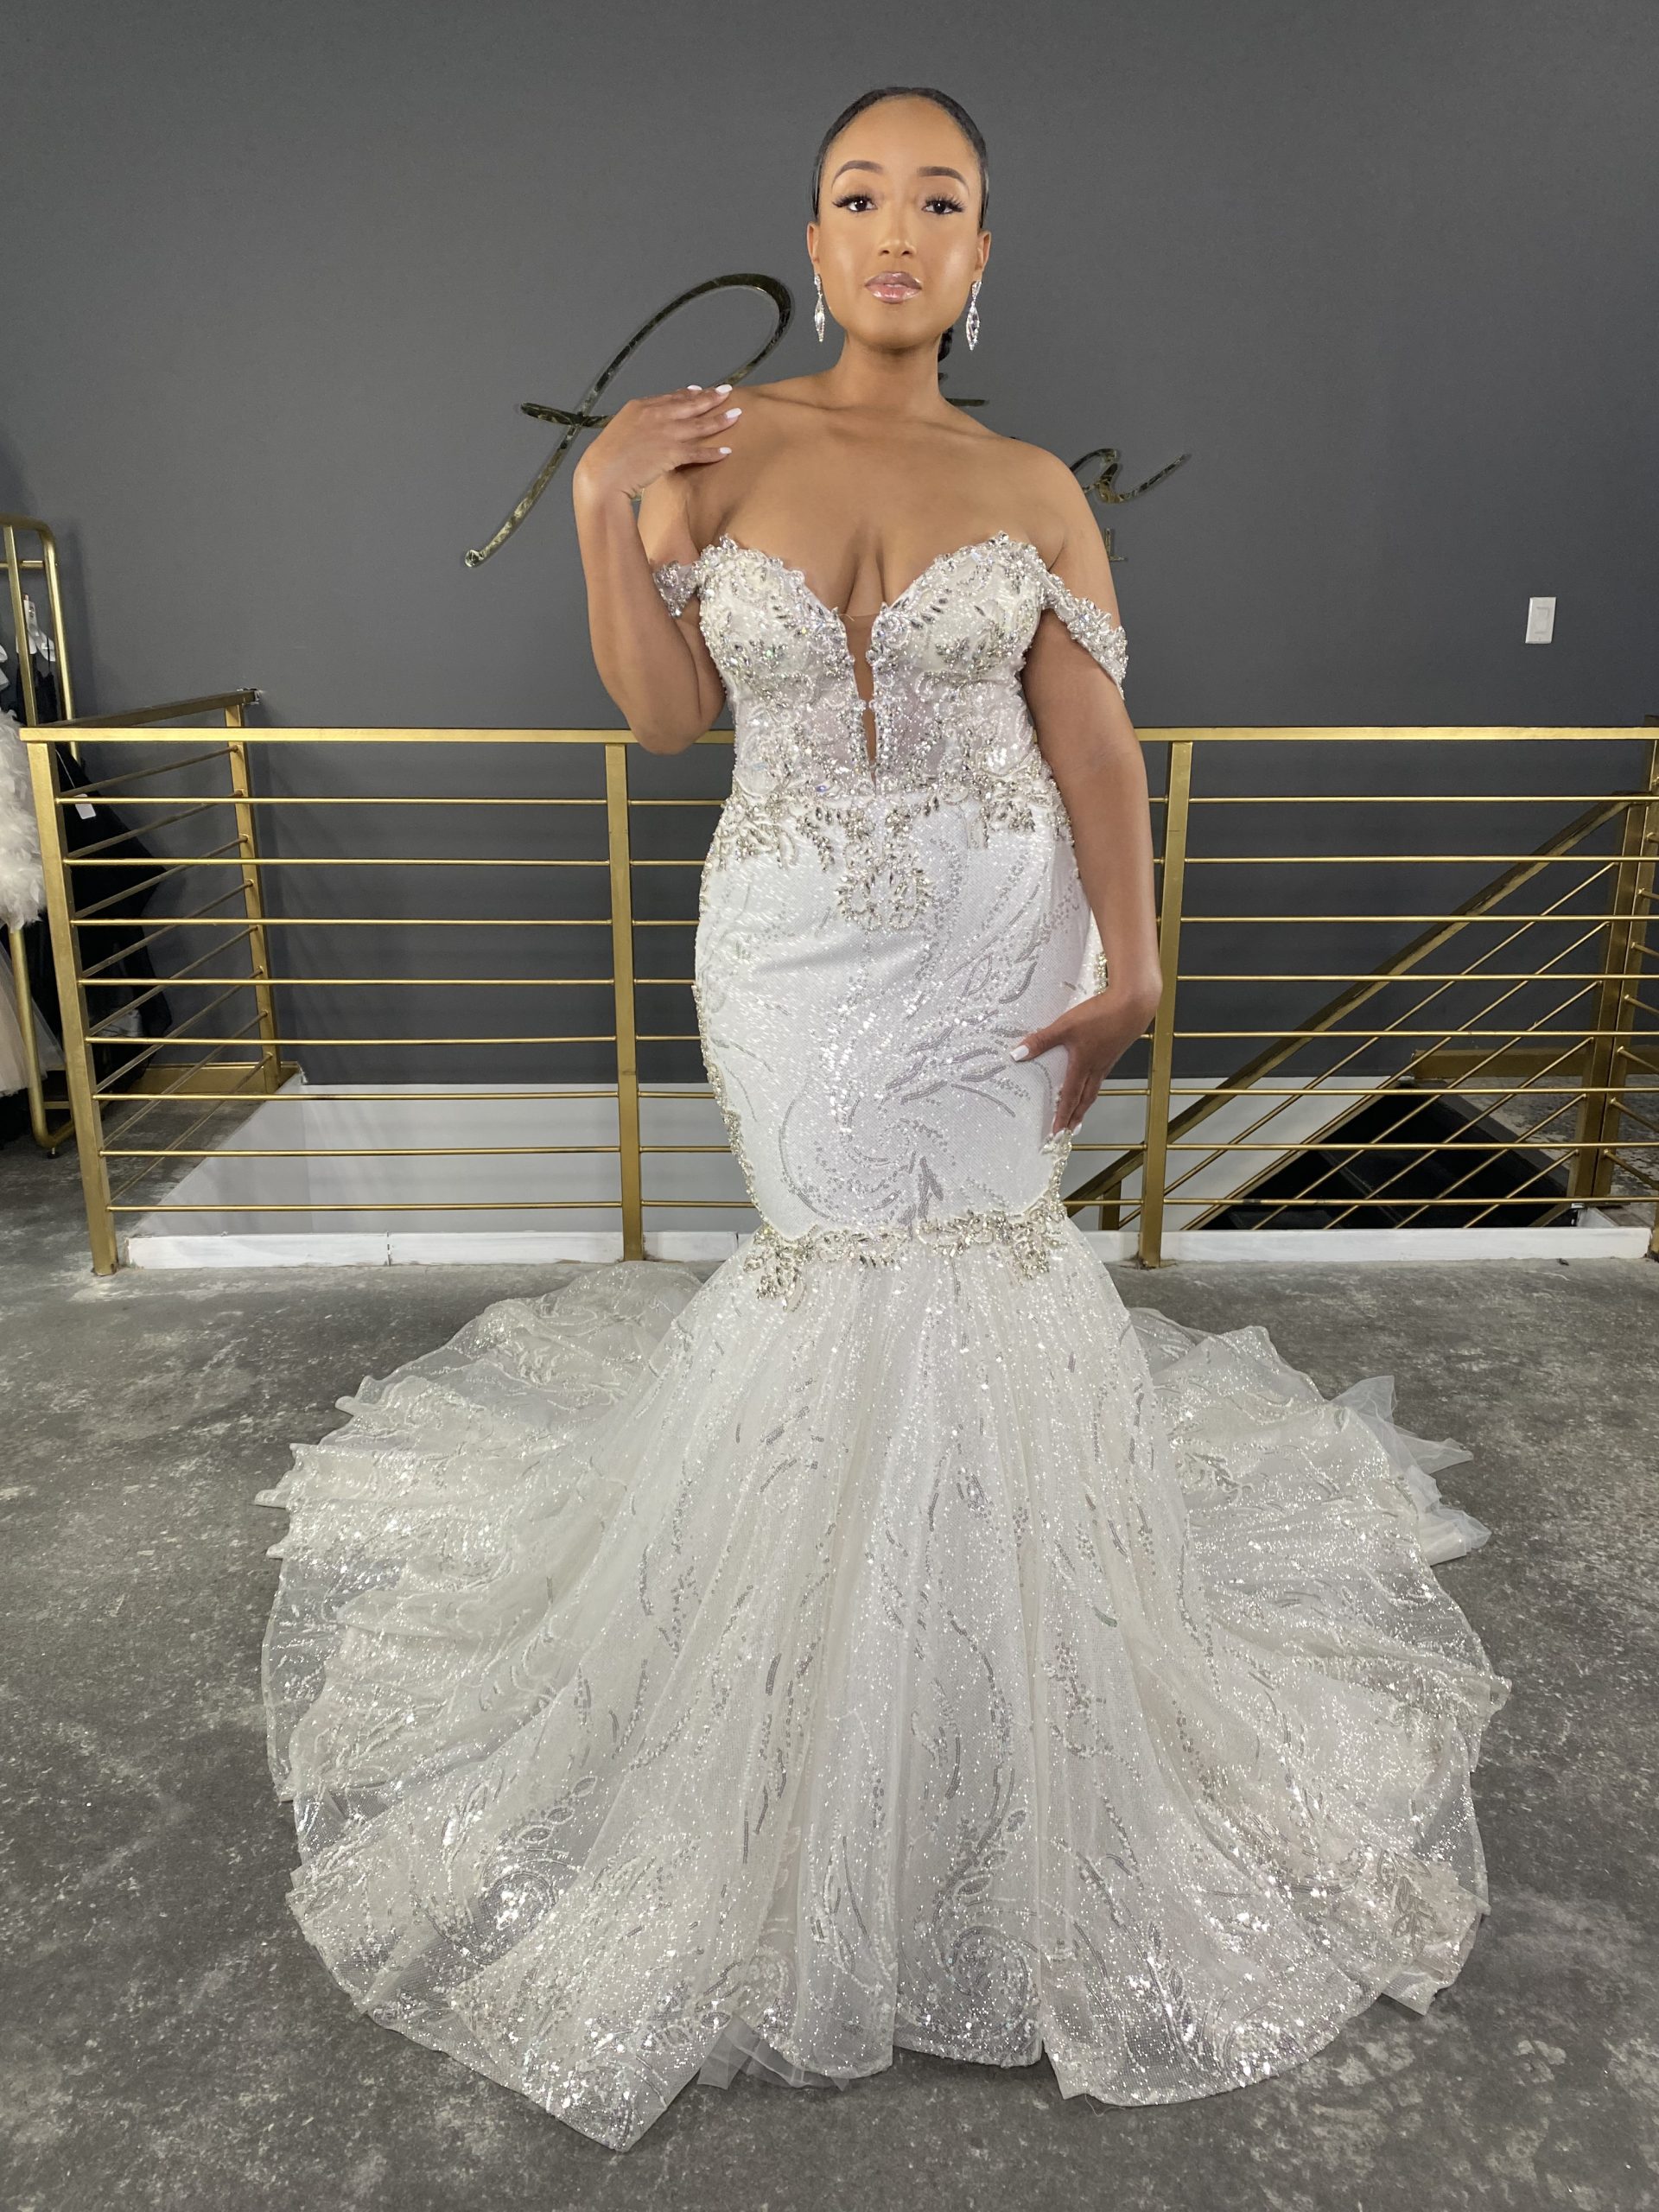 Pantora Bridal Off The Shoulder Deep V Neckline Mermaid Wedding Dress With Sequins And Bling 34472928 Scaled 